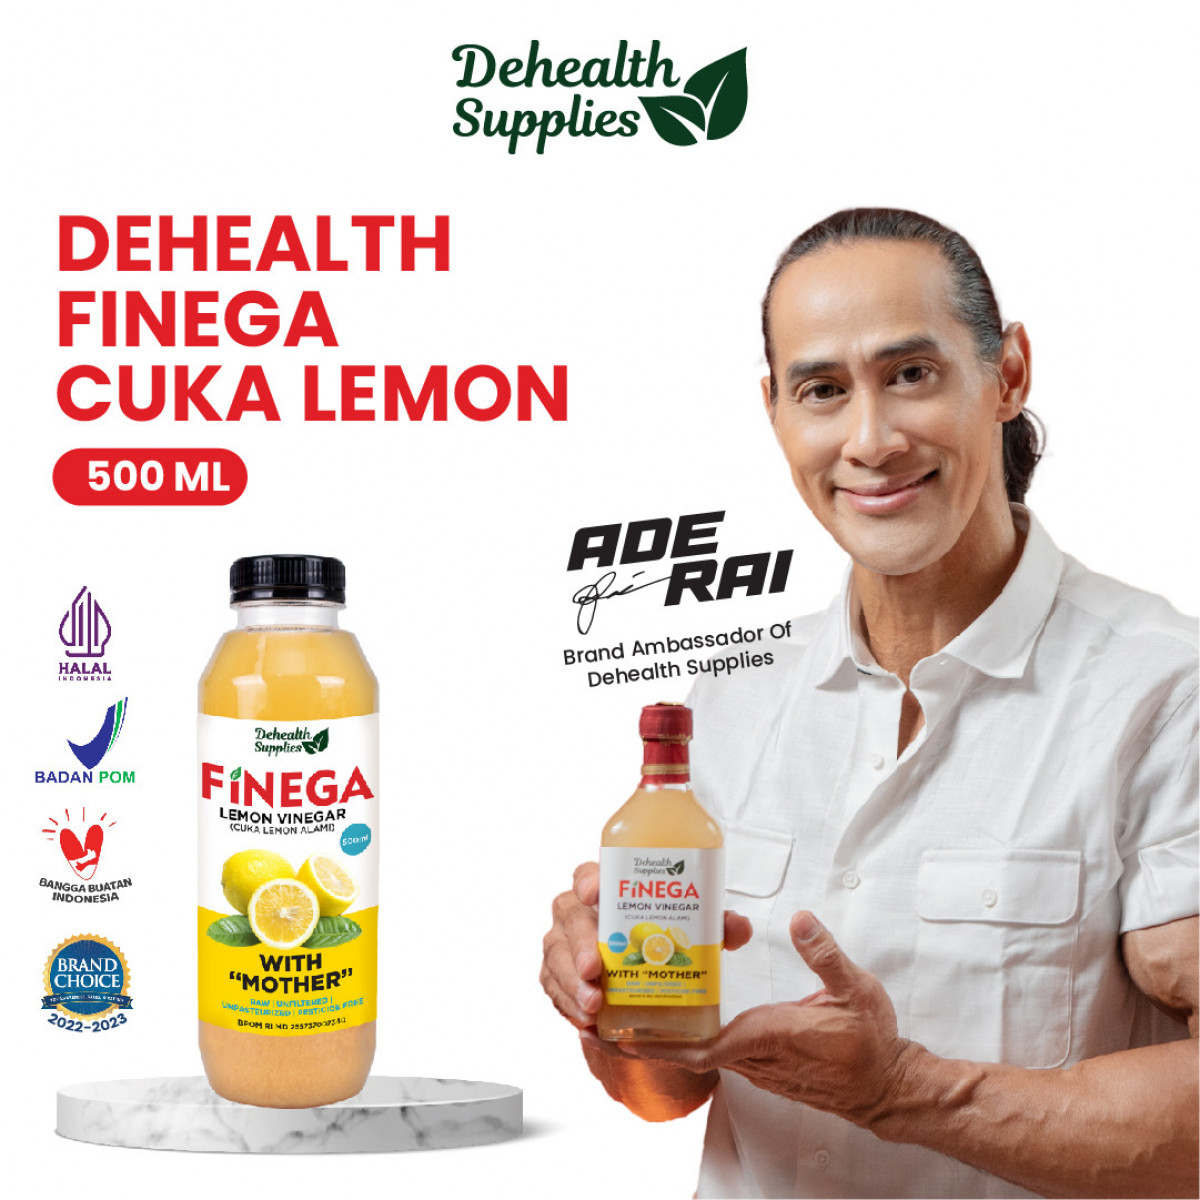 Dehealth Supplies Finega Cuka Lemon 500ml Kemasan Plastik